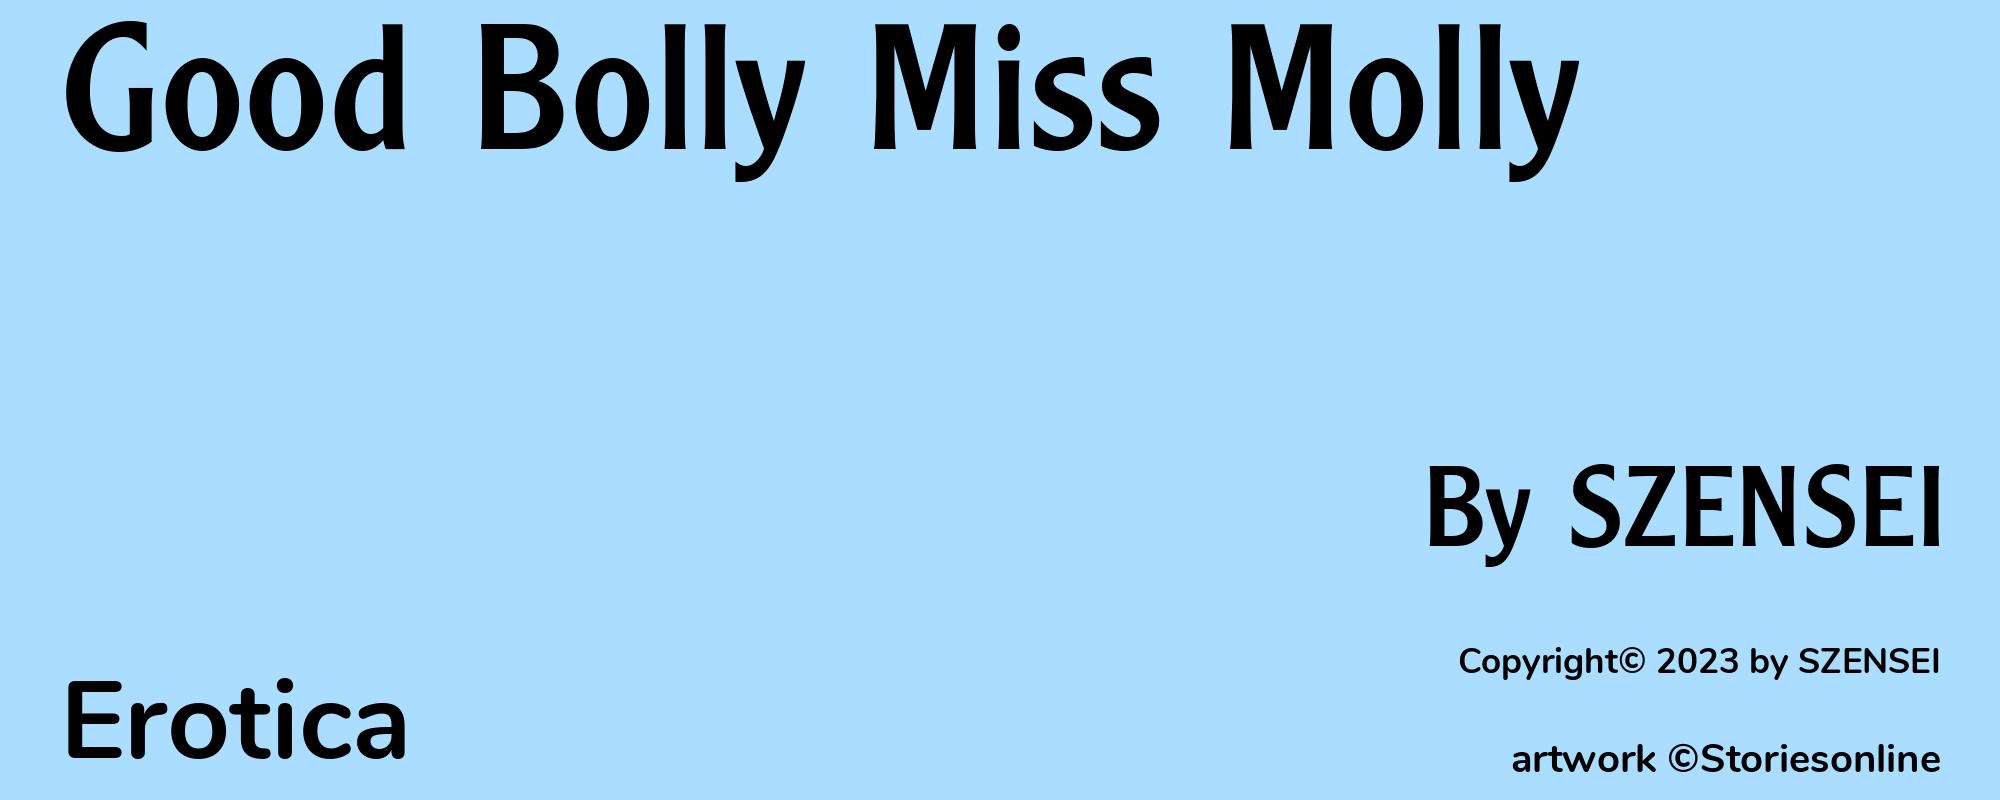 Good Bolly Miss Molly - Cover